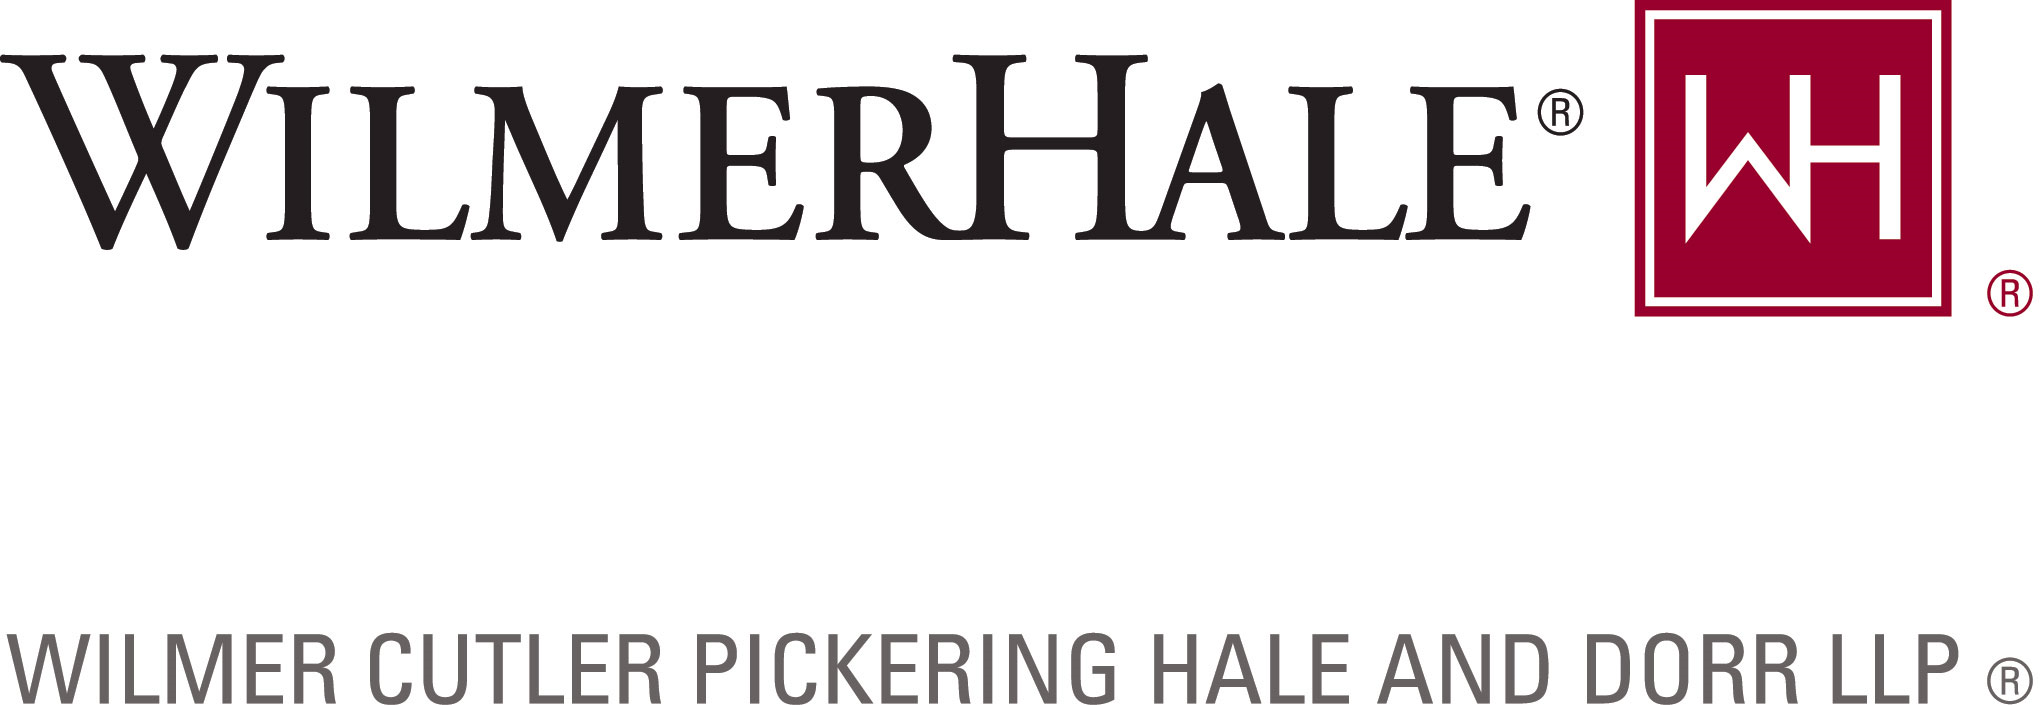 WilmerHale Company Logo